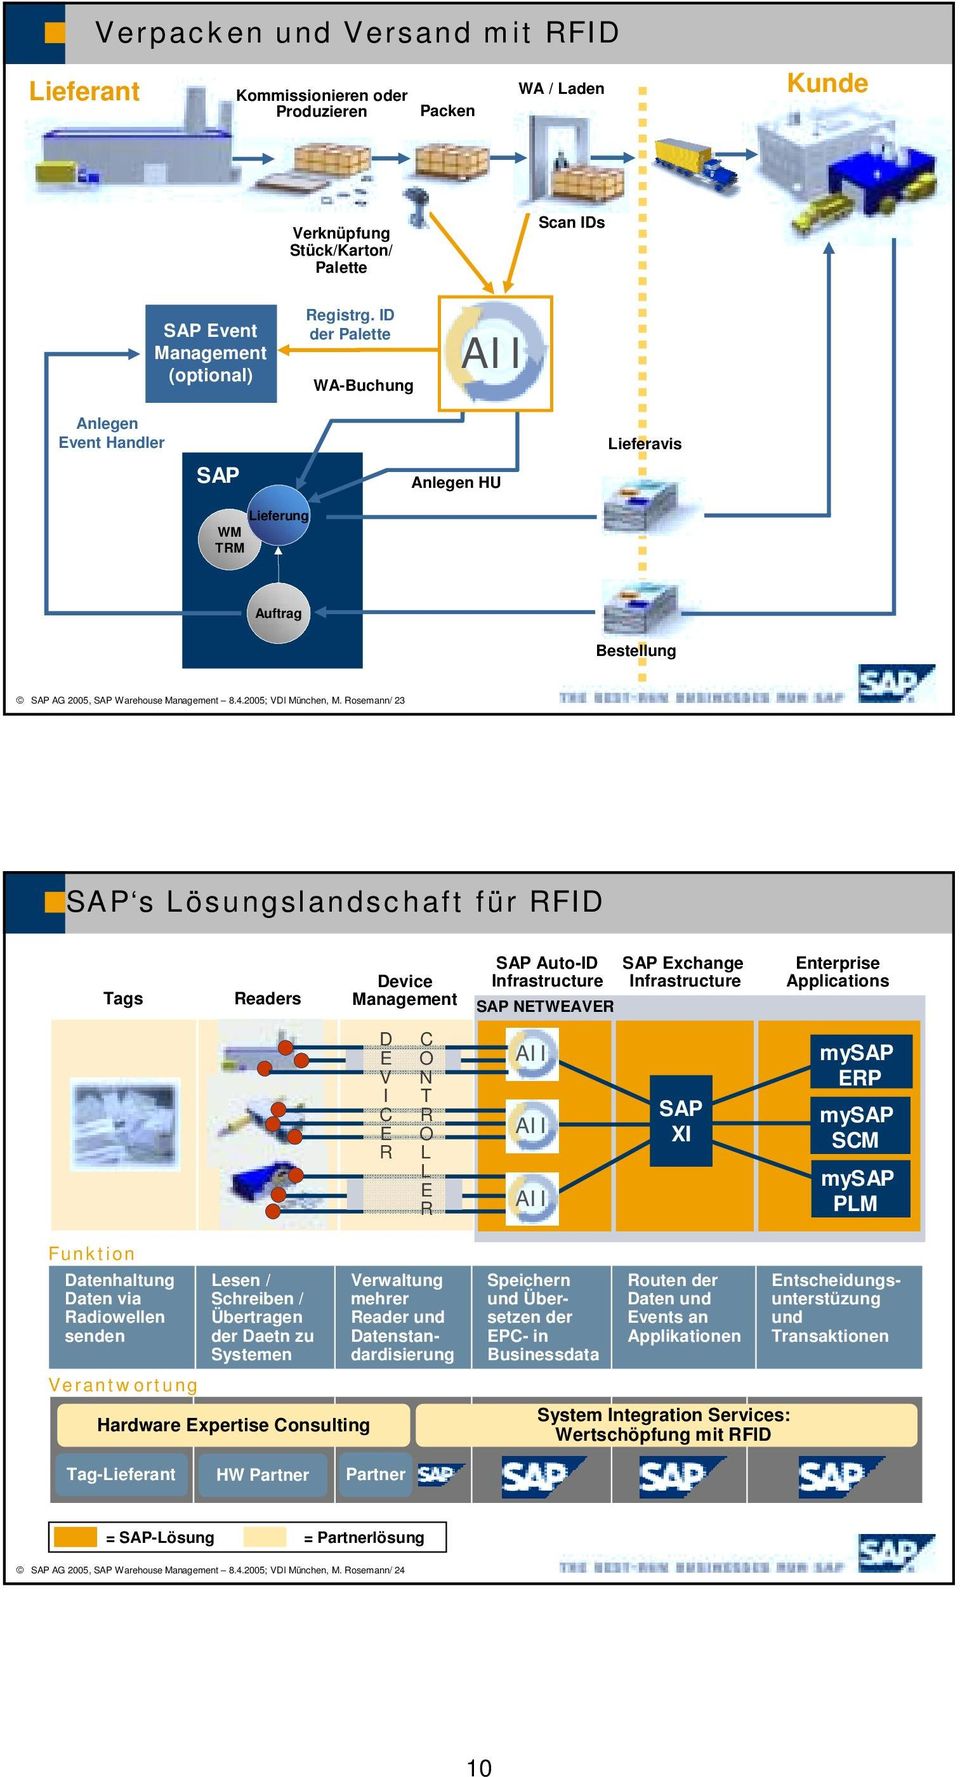 Rosemann/ 23 SAP s Lösungslandschaft für RFID Tags Readers Device Management SAP Auto-ID Infrastructure SAP NETWEAVER SAP Exchange Infrastructure Enterprise Applications D E V I C E R C O N T R O L L